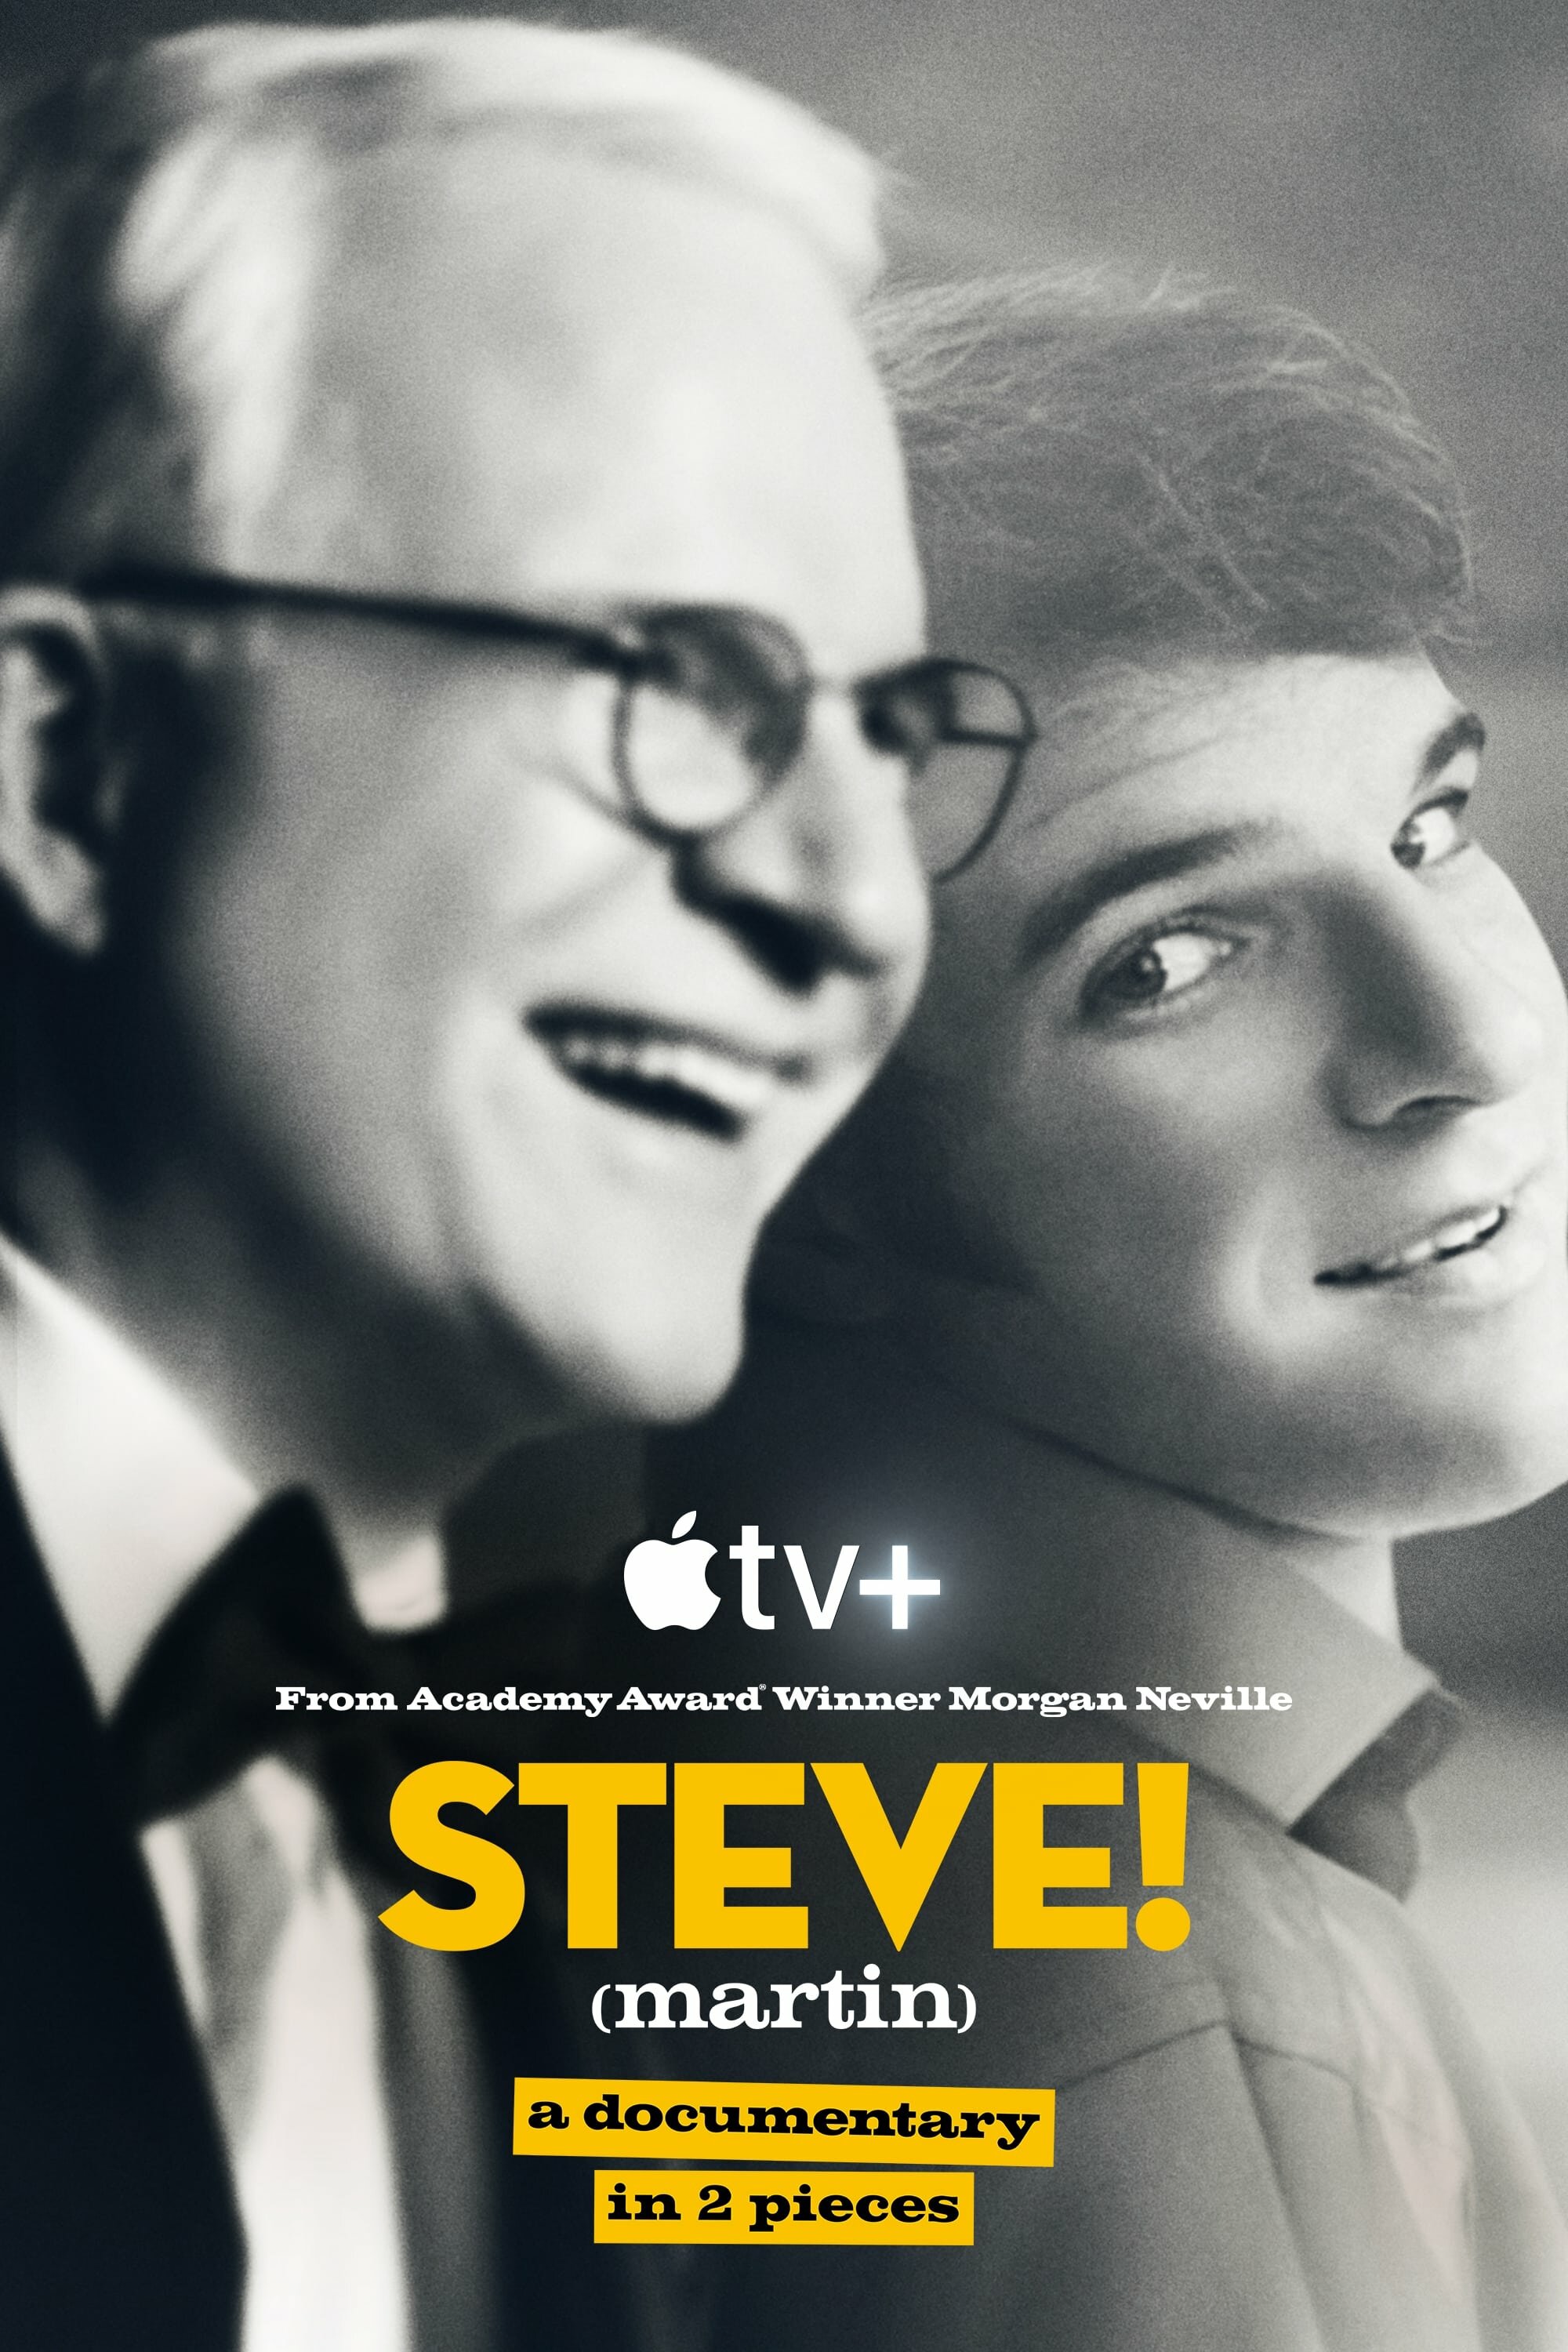 STEVE! (martin) a documentary in 2 pieces ne zaman